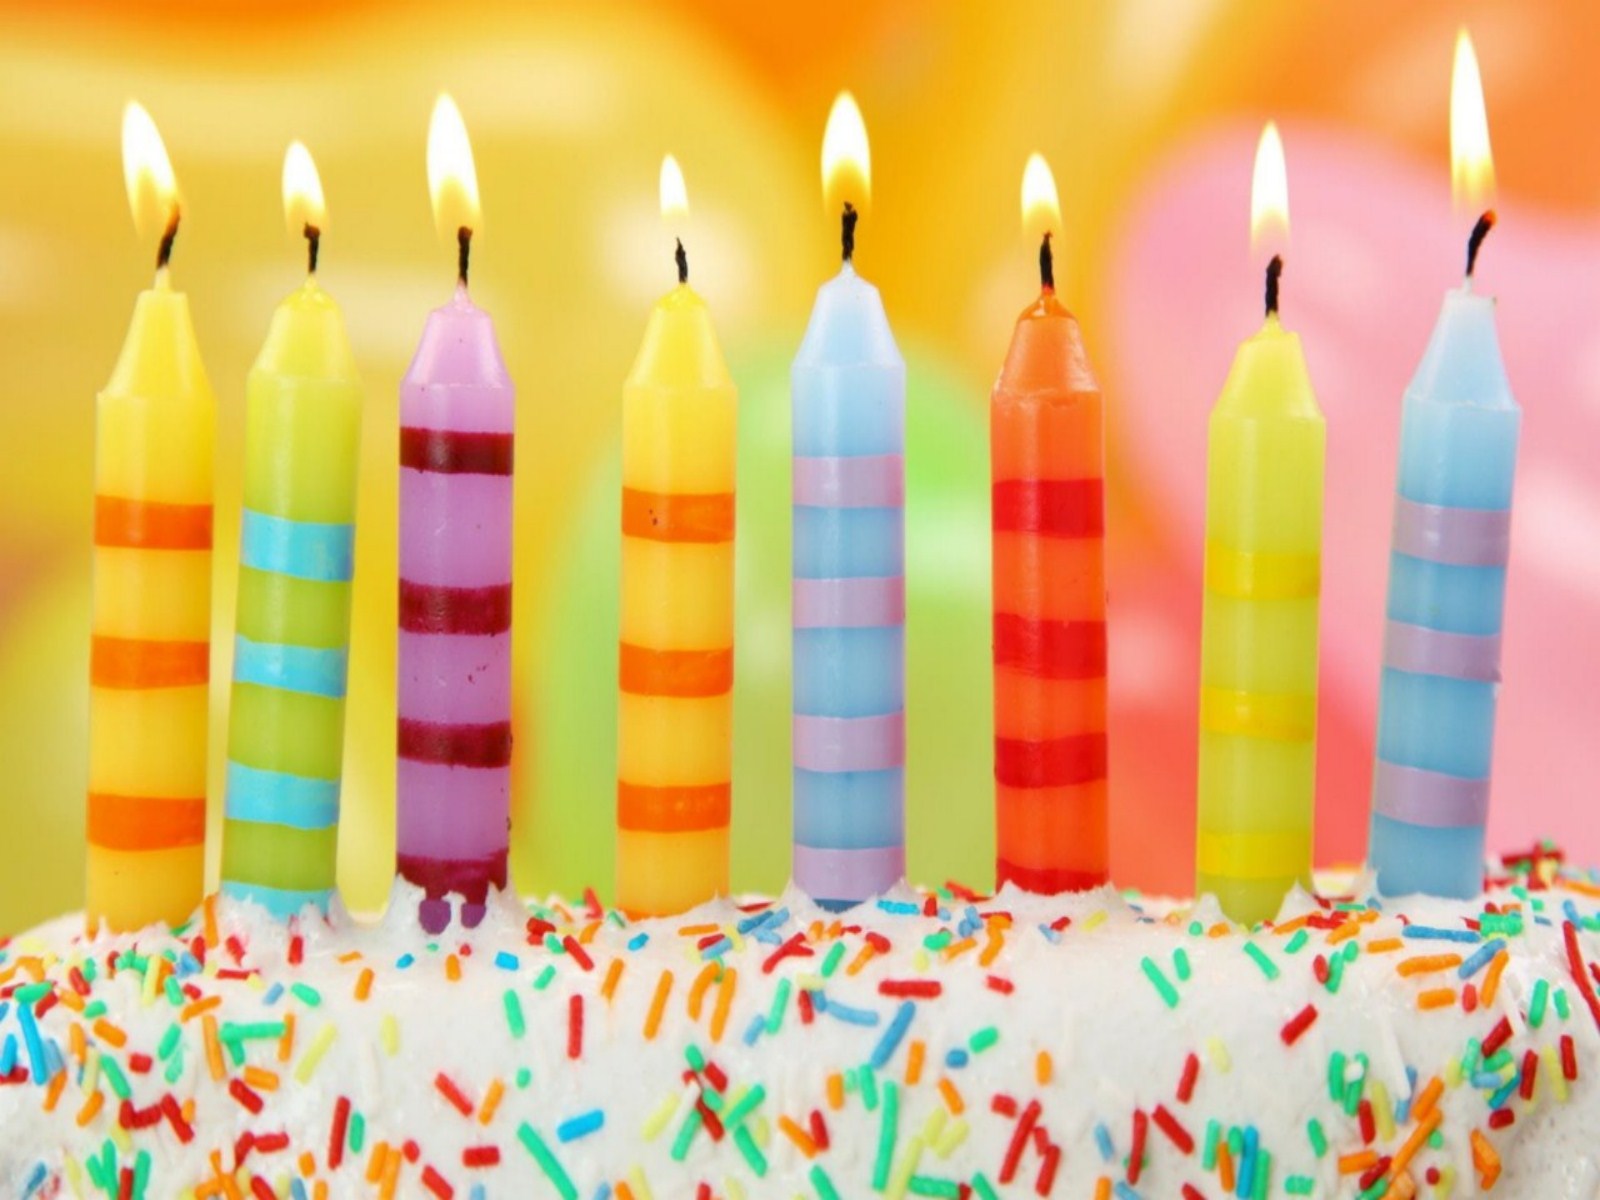 wallpaper url,candle,birthday candle,birthday,lighting,cake